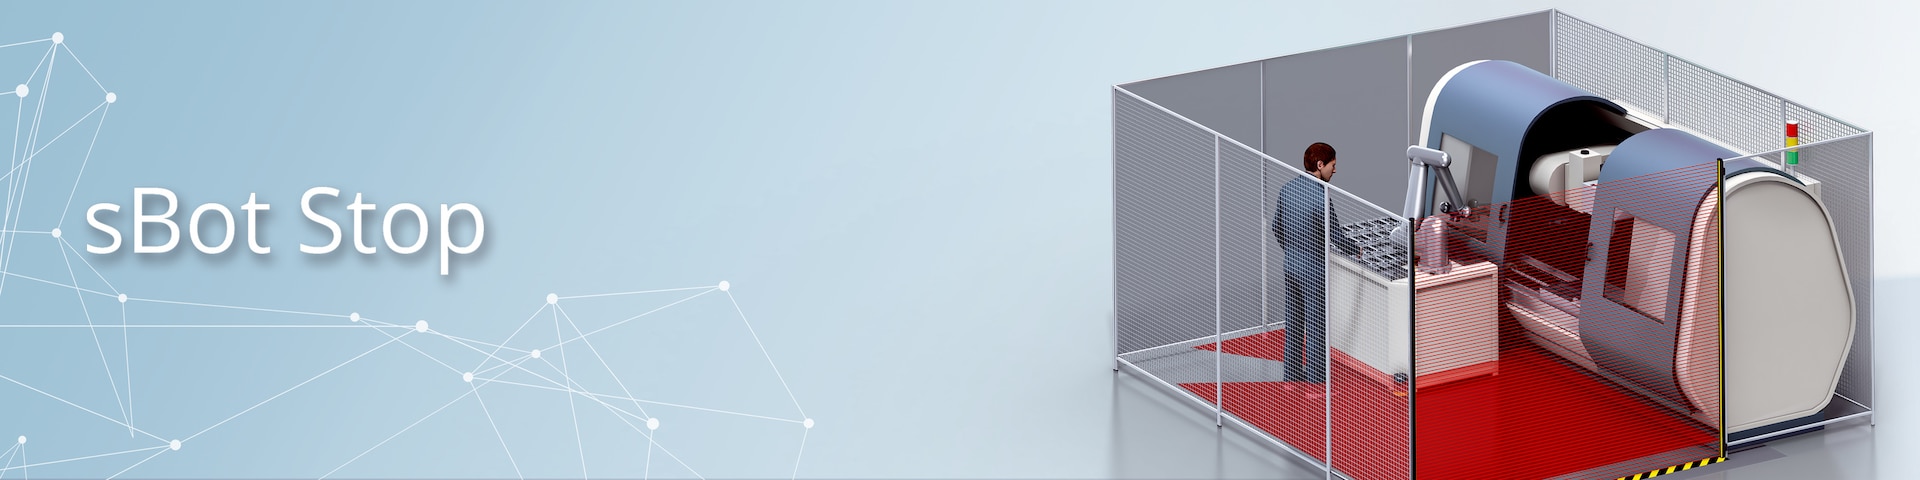 Abot® Provides Safe, Automated Box Cutting - Courtesy of Robotica 